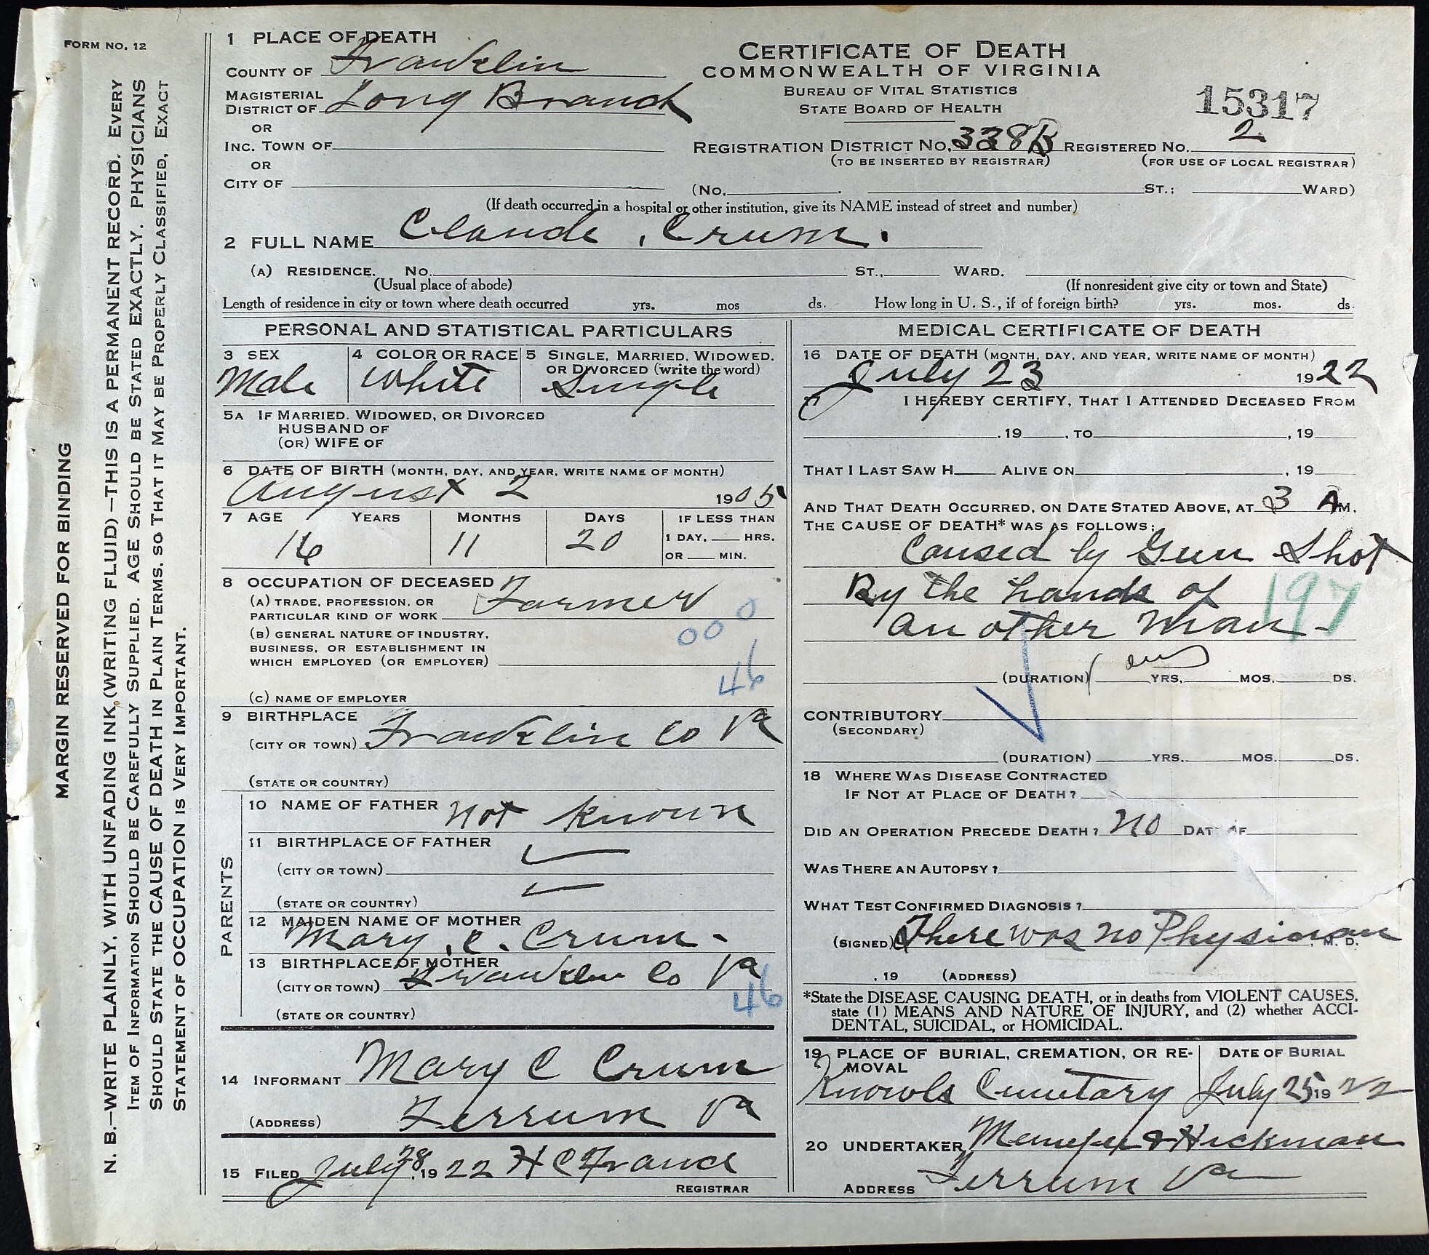 Death Certificate of Claude Crum